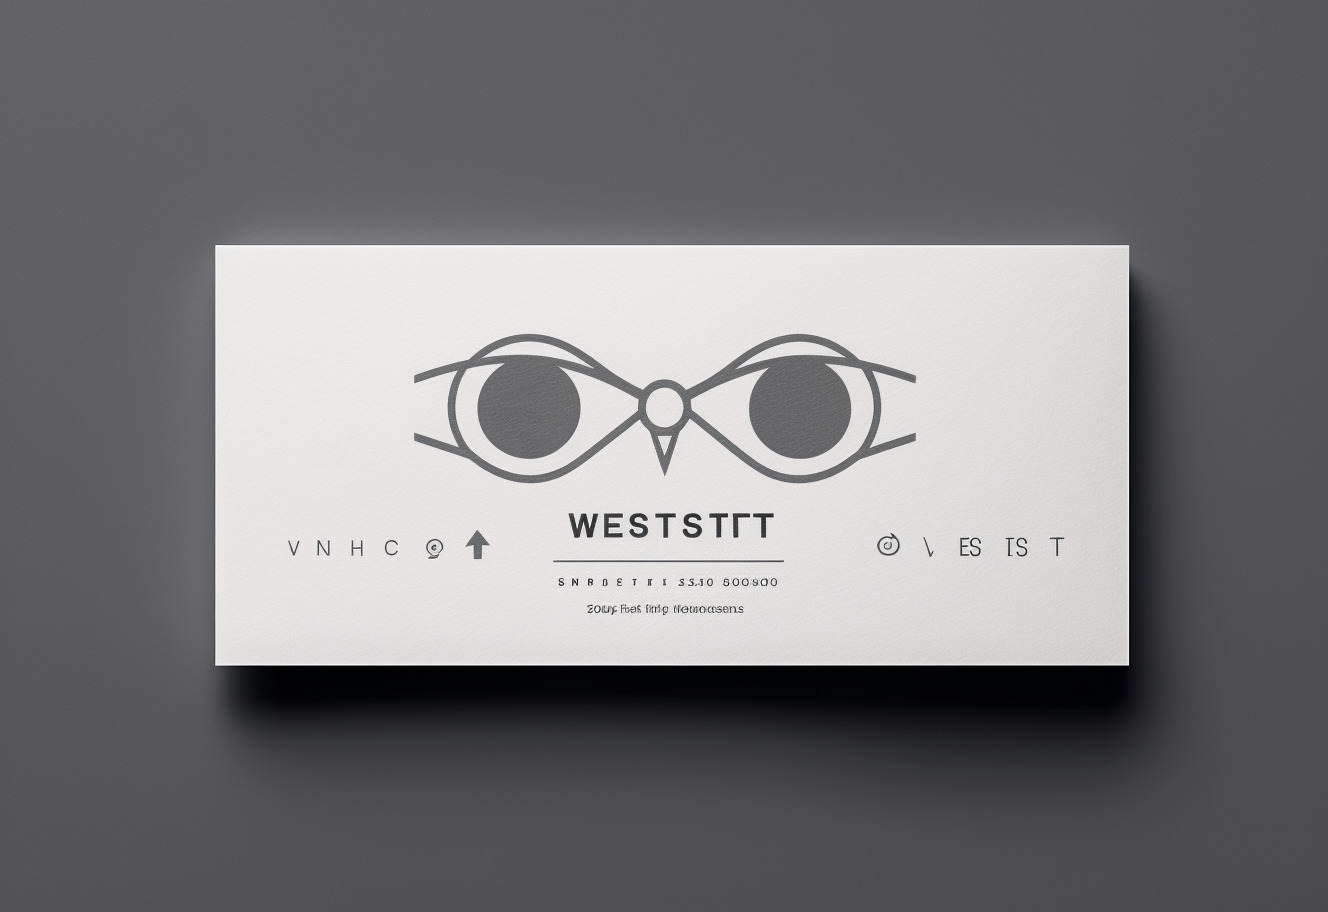 Sleek Simplicity - Minimalist Watch Business Card Designs